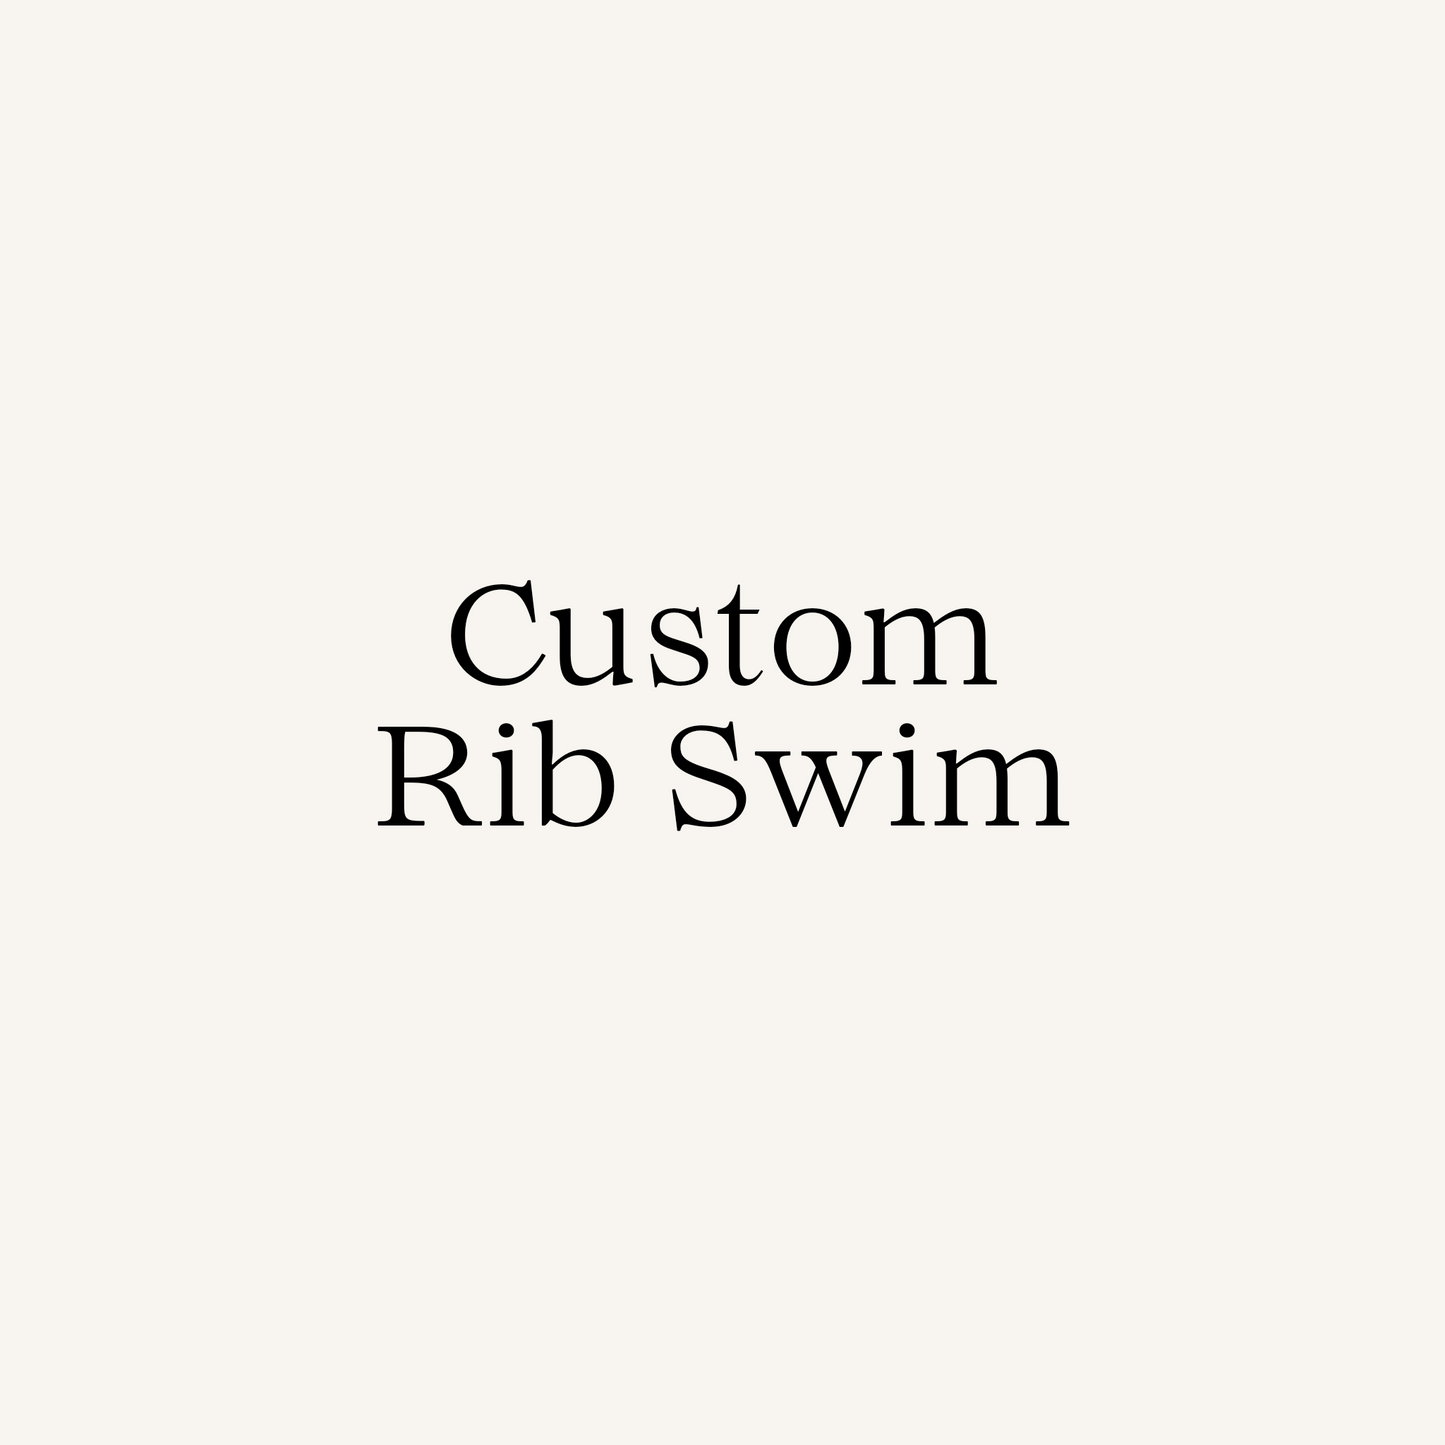 Custom Rib Swim